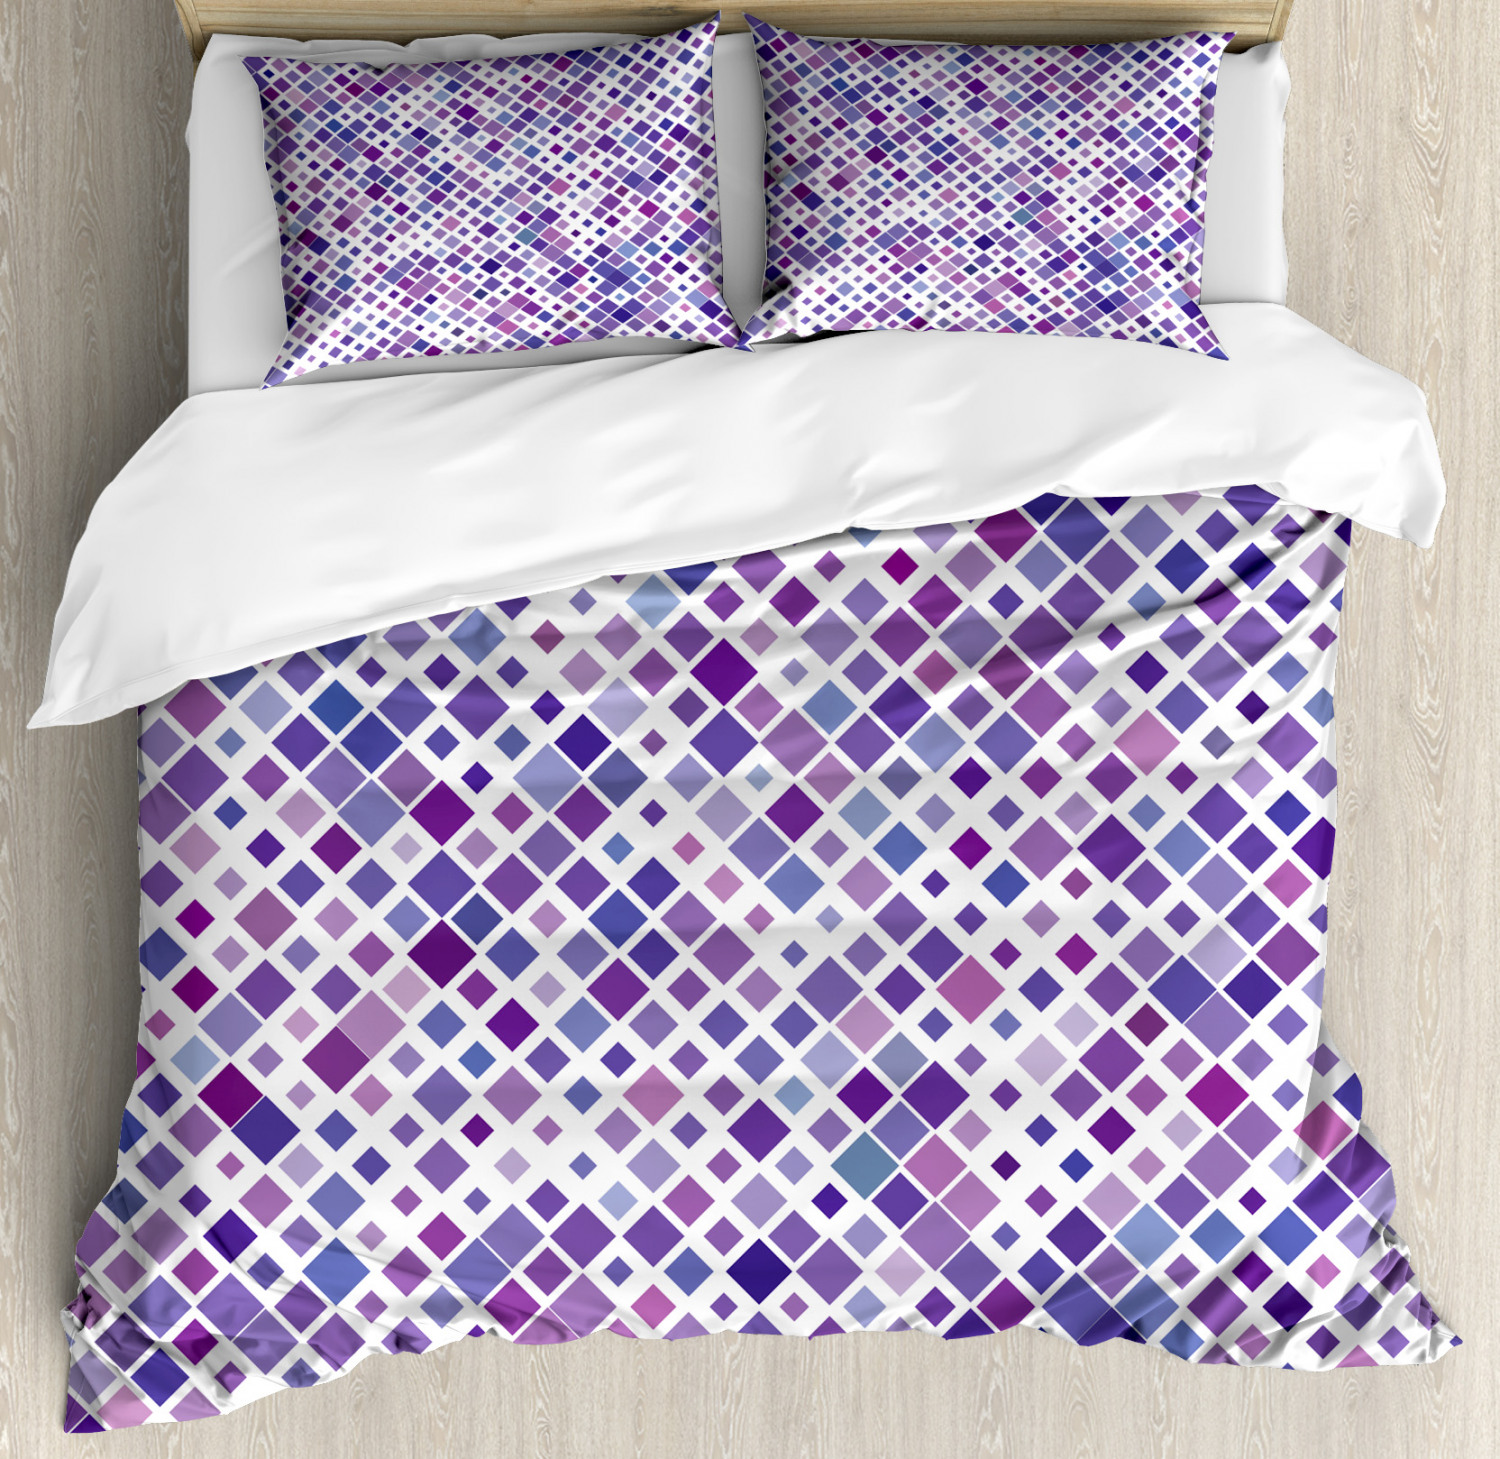 Lavender Duvet Cover Set With Pillow Shams Purple Retro Artsy